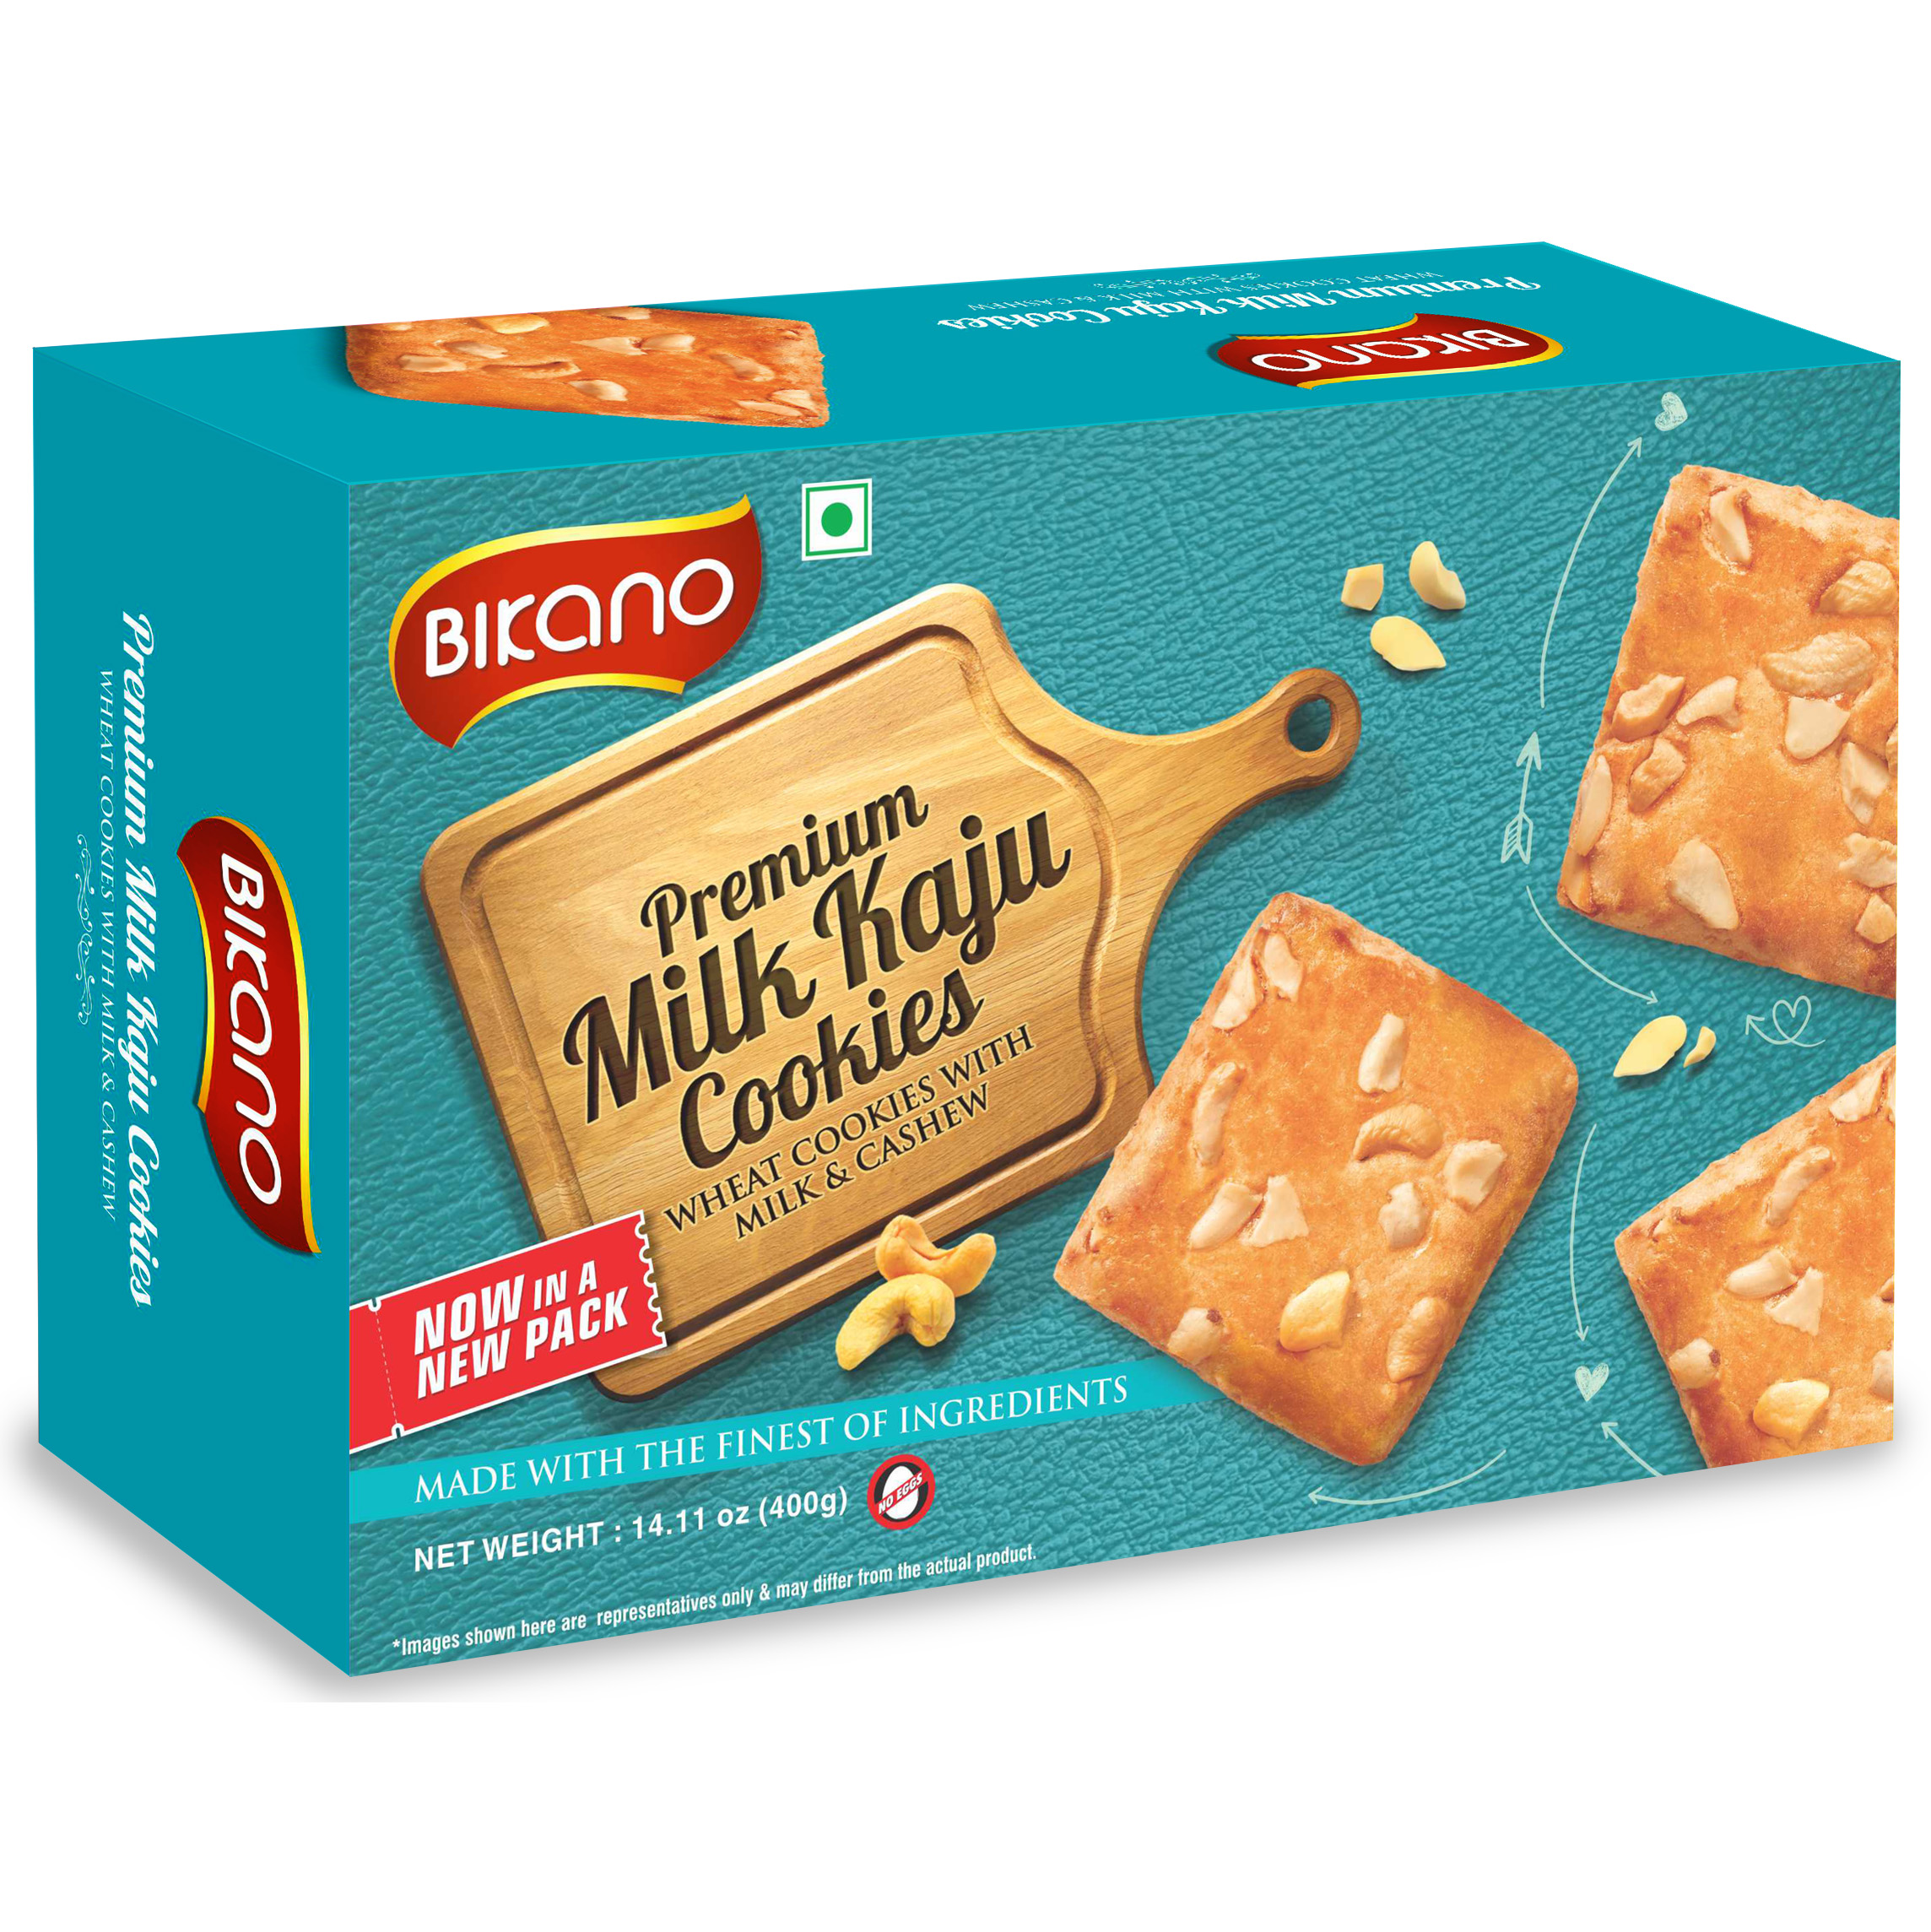 Premium MILK KAJU COOKIES, Bikano (ПРЕМИУМ МИЛК КАДЖУ КУКИС печенье молочное с кешью, Бикано), 400 г.